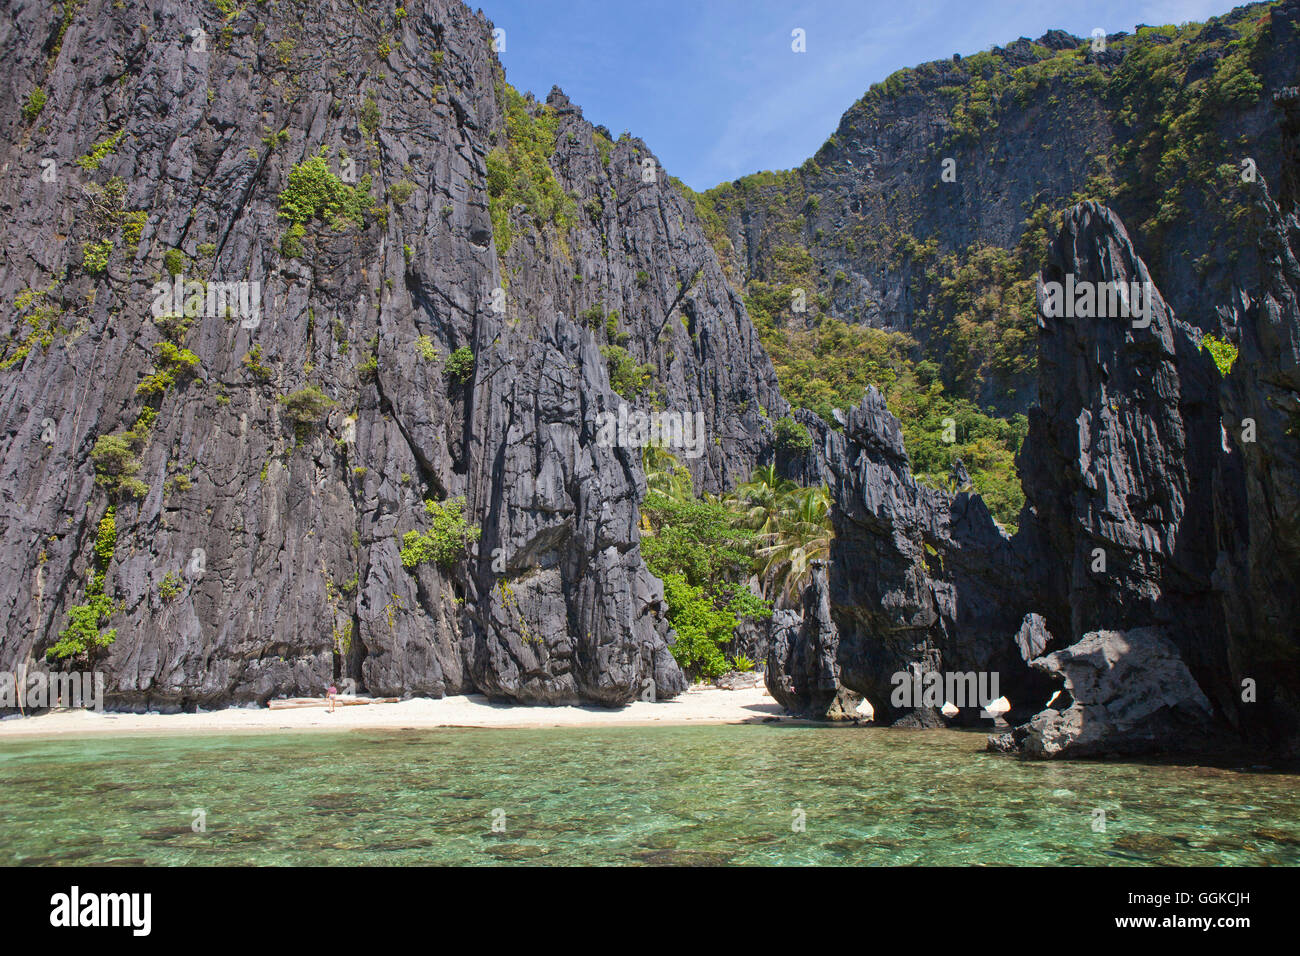 Bizarre Felsformationen im Bacuit-Archipel in der Nähe von El Nido, Palawan Island, South China Sea, Philippinen, Asien Stockfoto